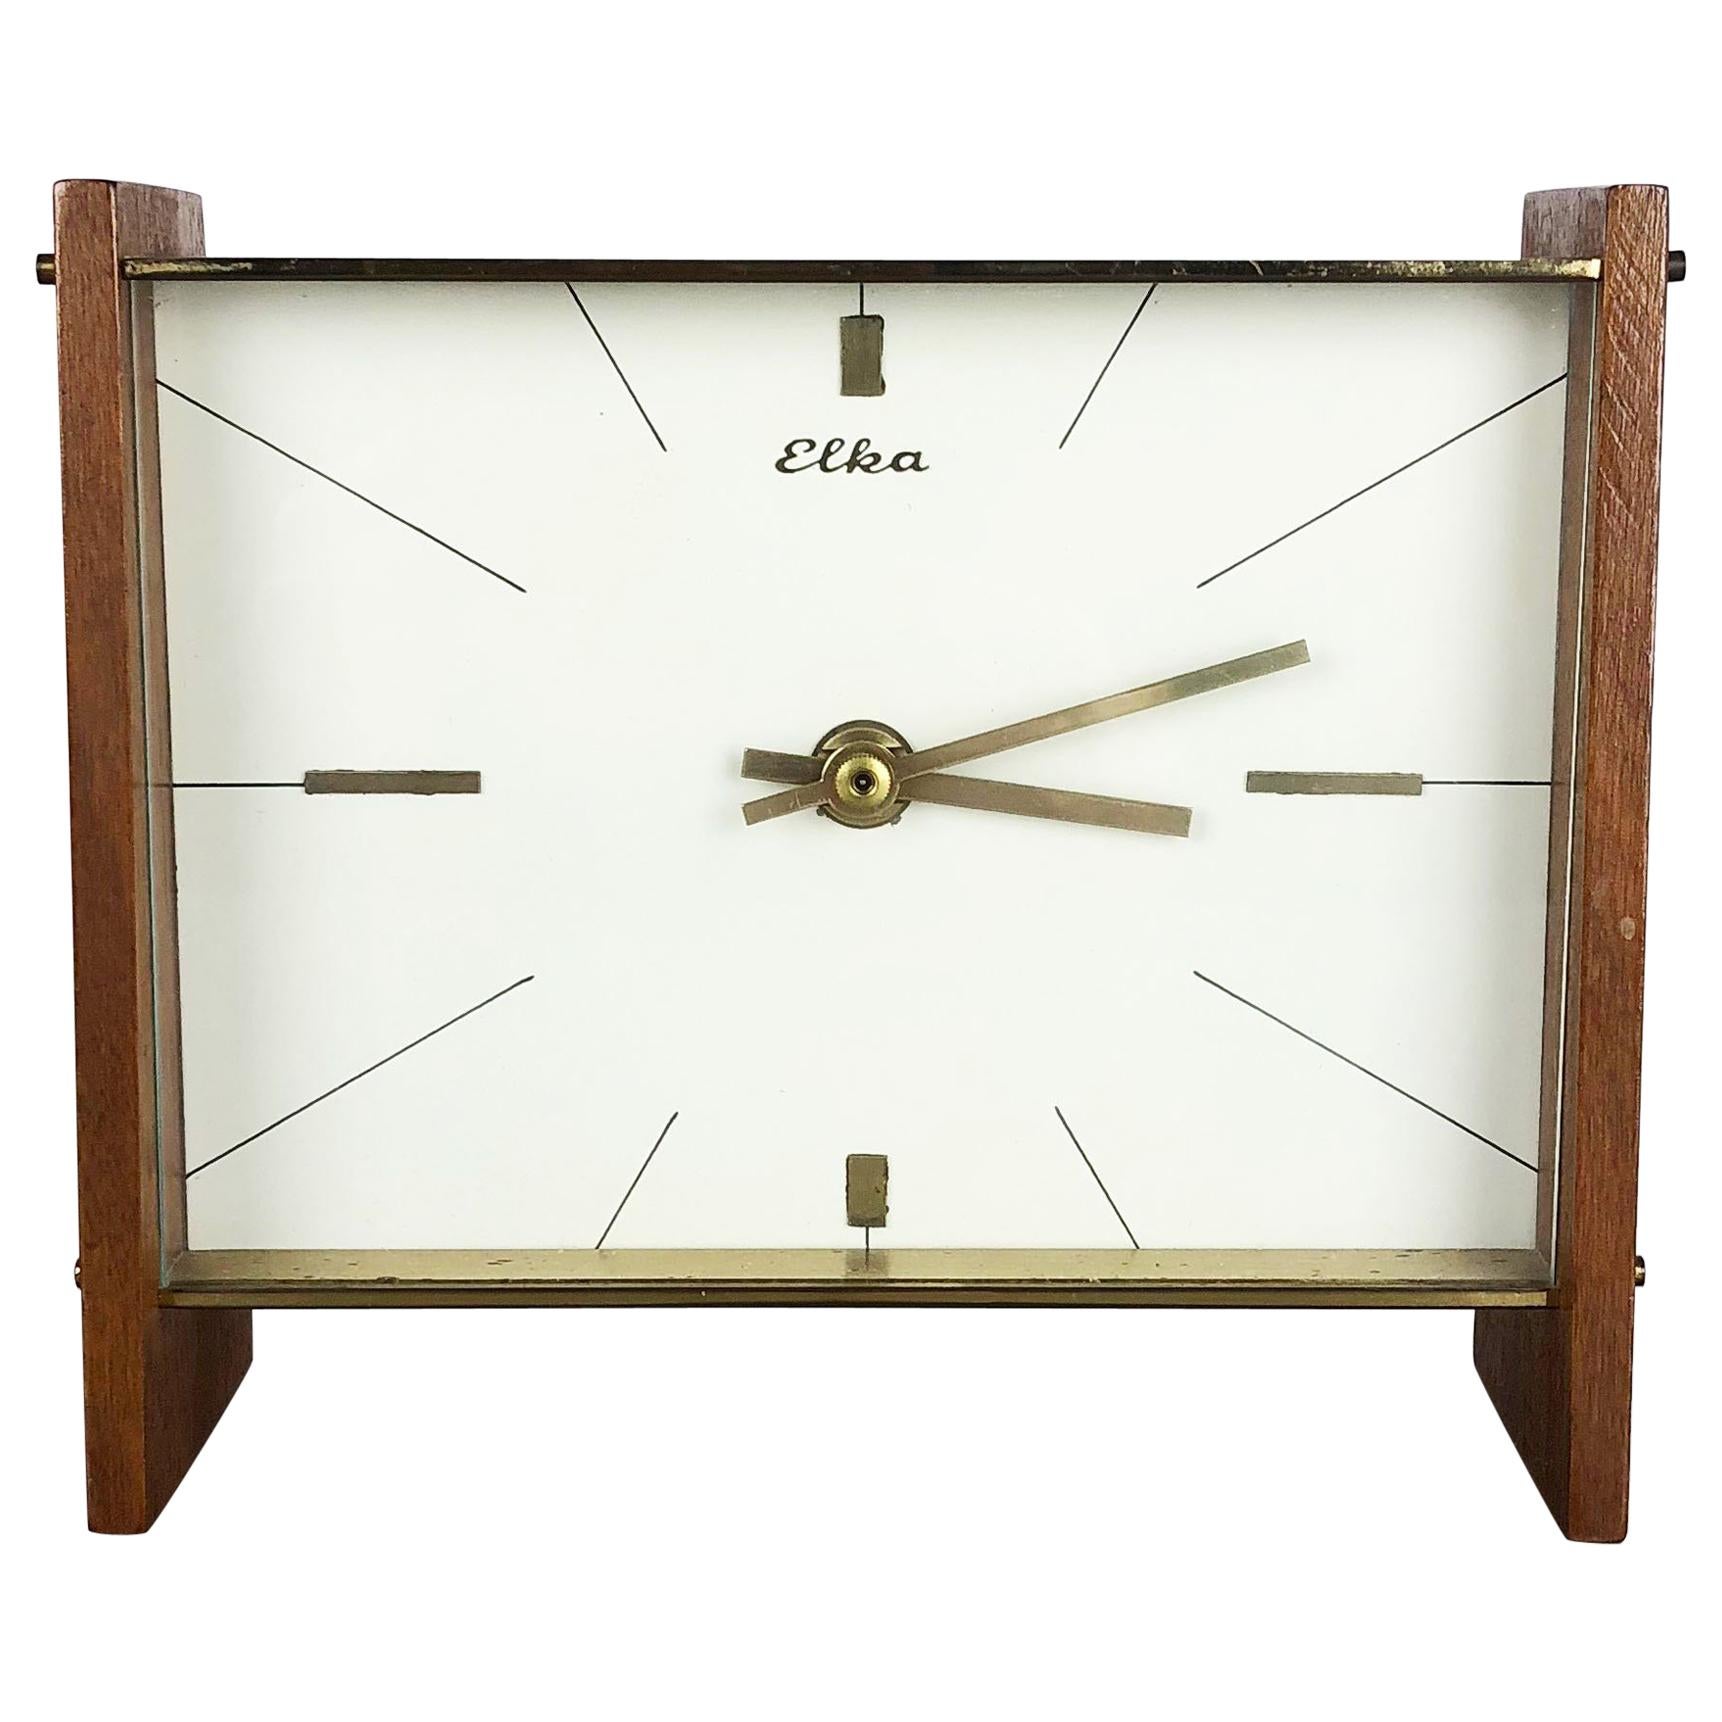 Vintage 1960s Modernist Wooden Teak and Brass Table Clock by Elka, Germany